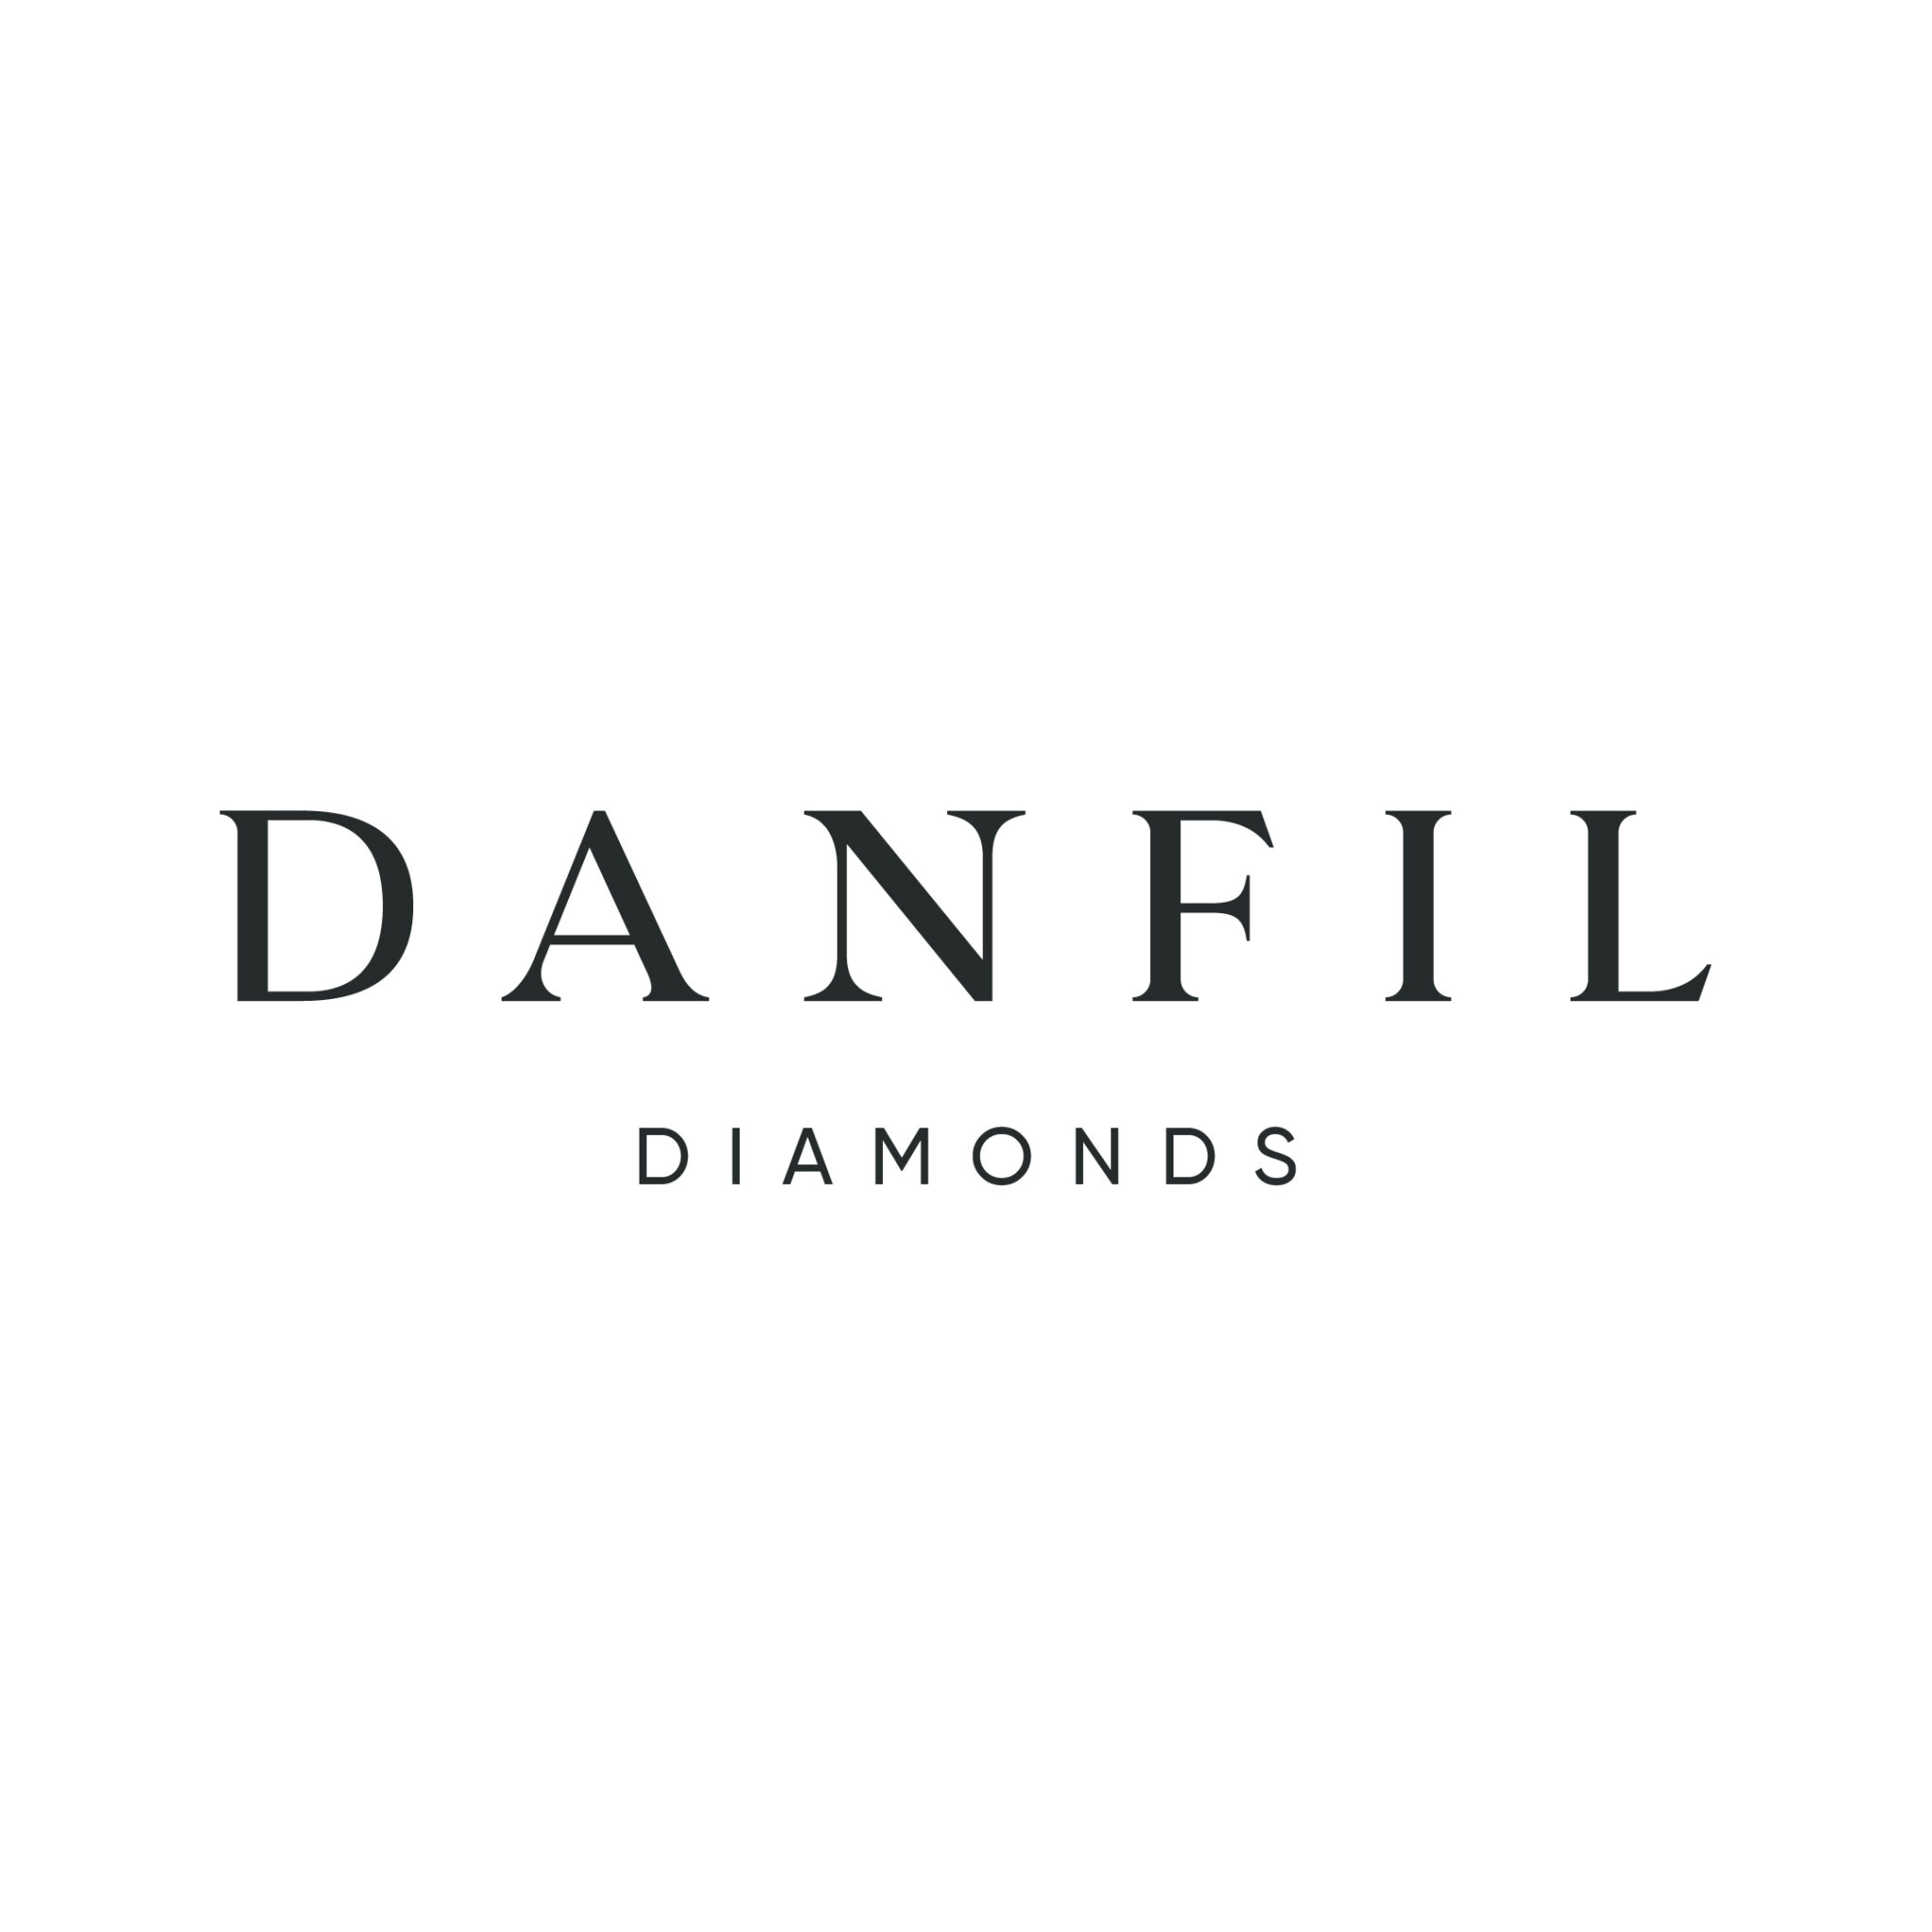 Danfil Diamonds